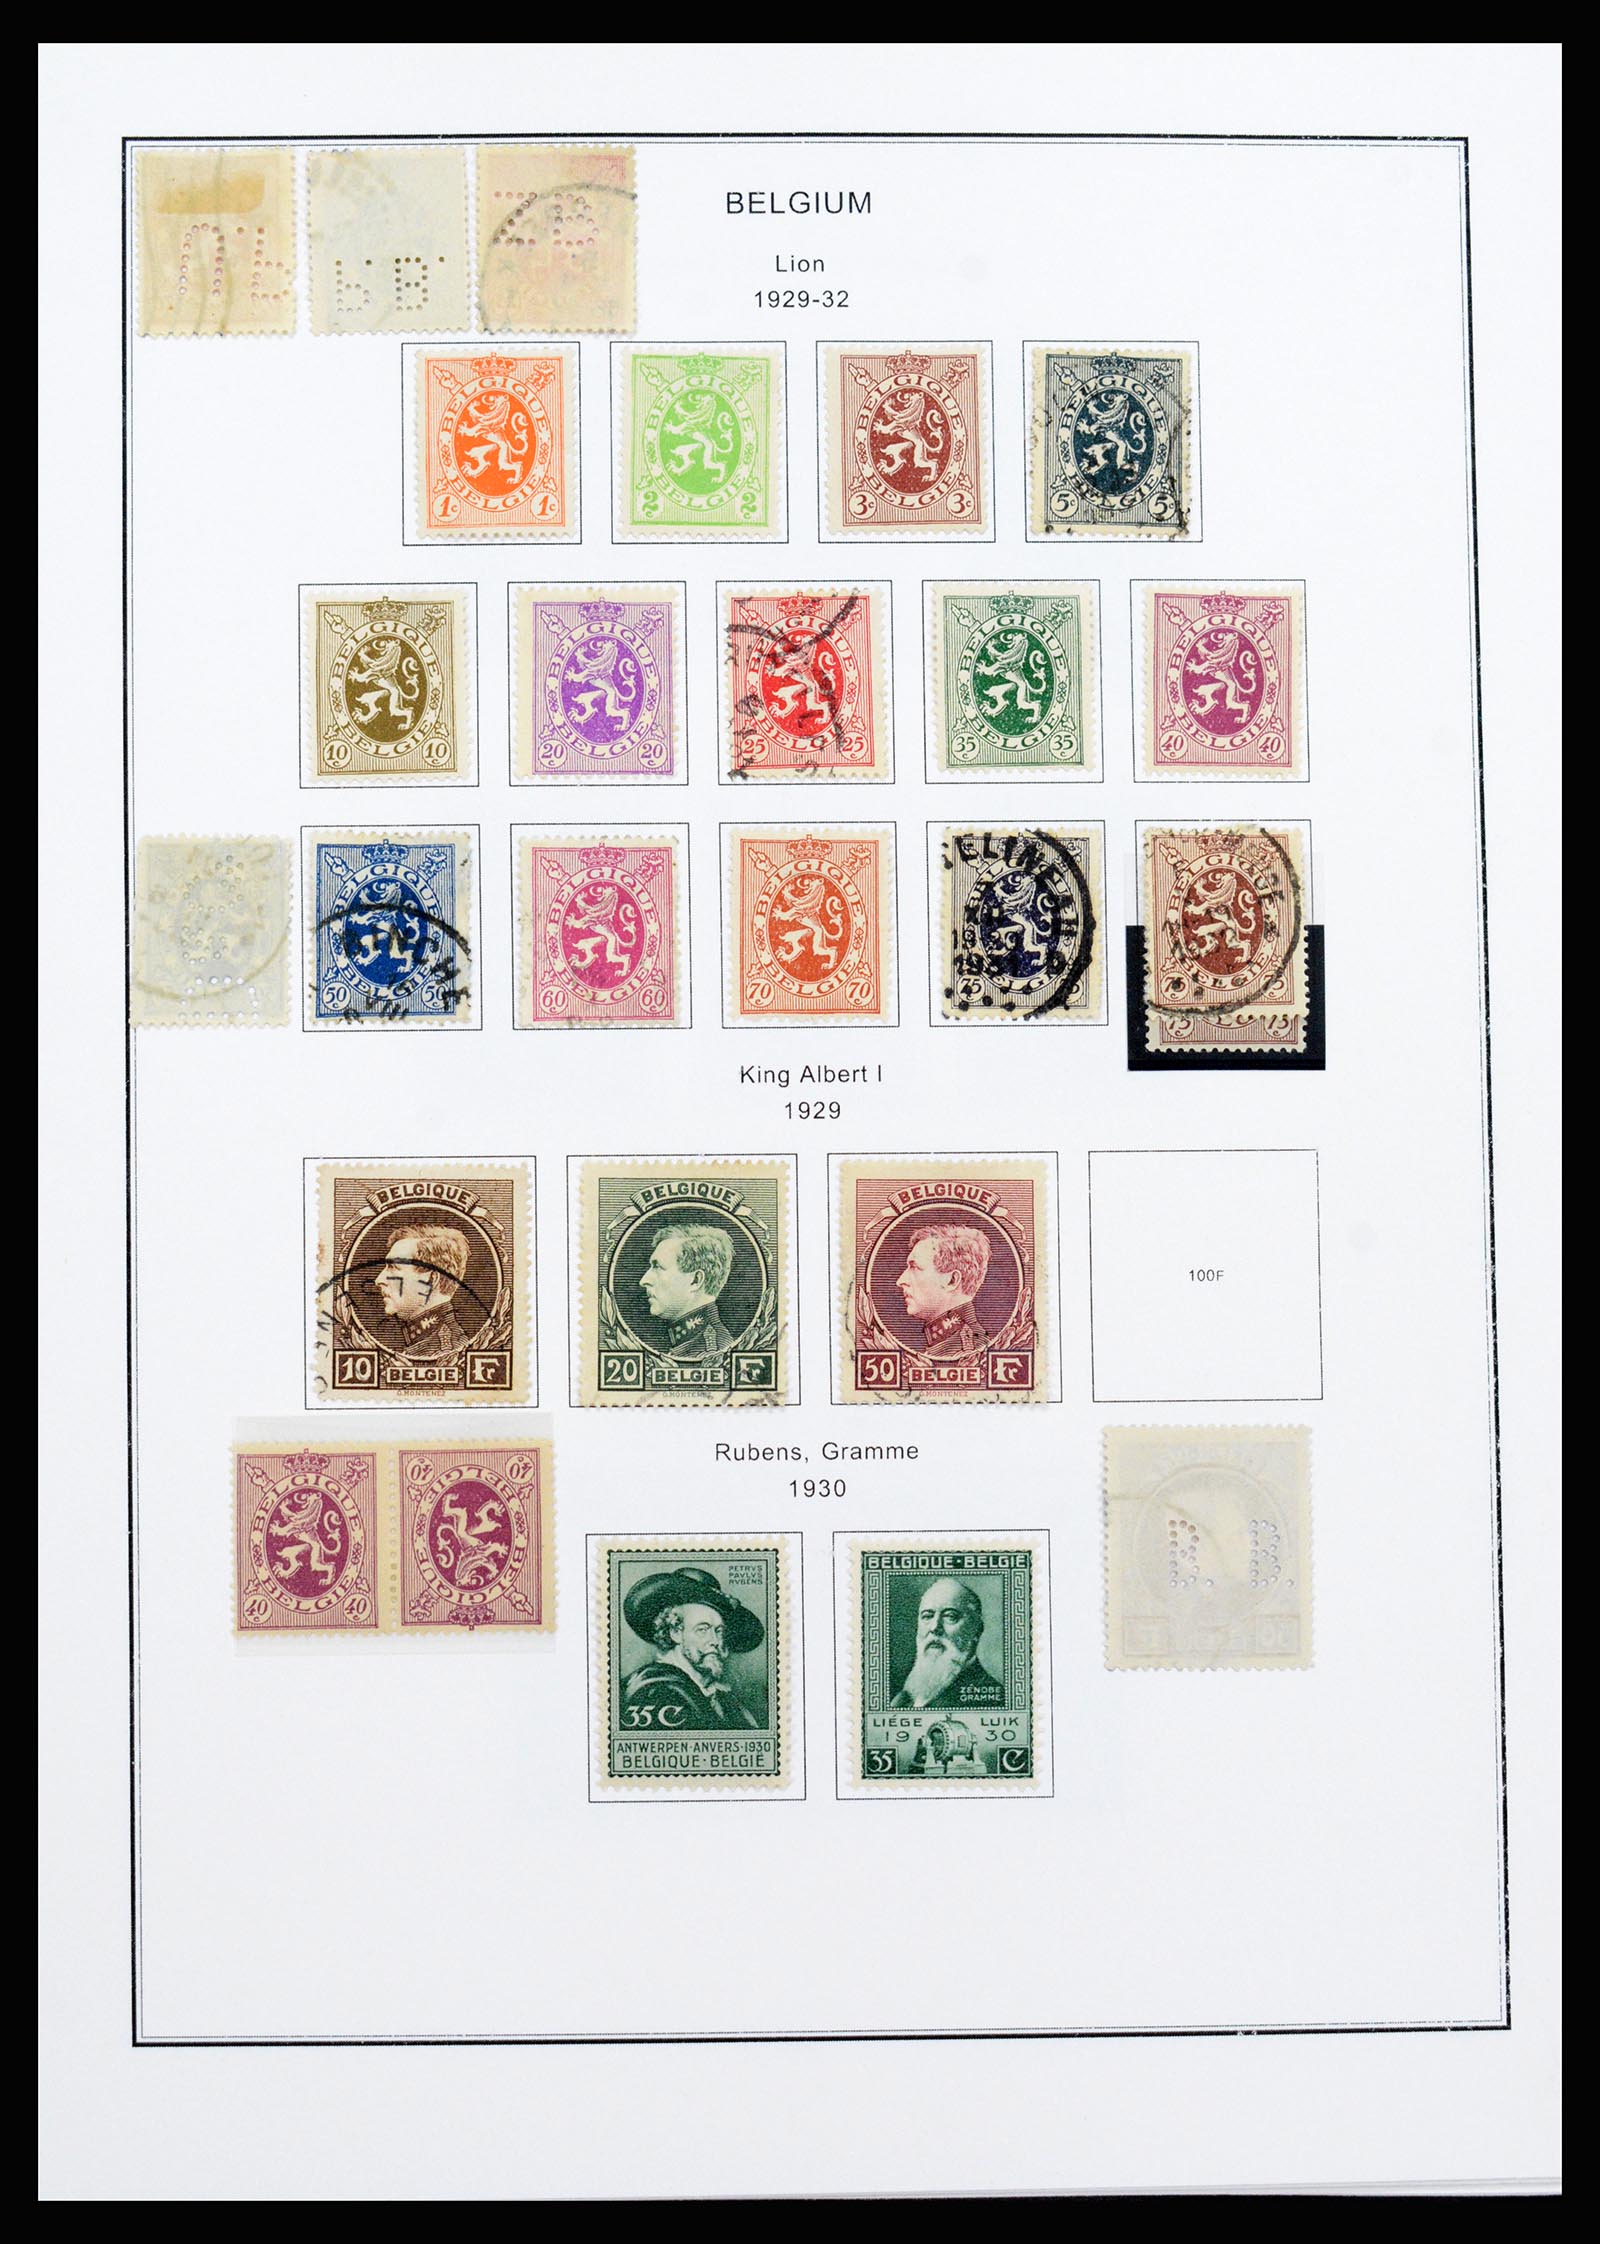 37240 019 - Stamp collection 37240 Belgium 1849-1996.